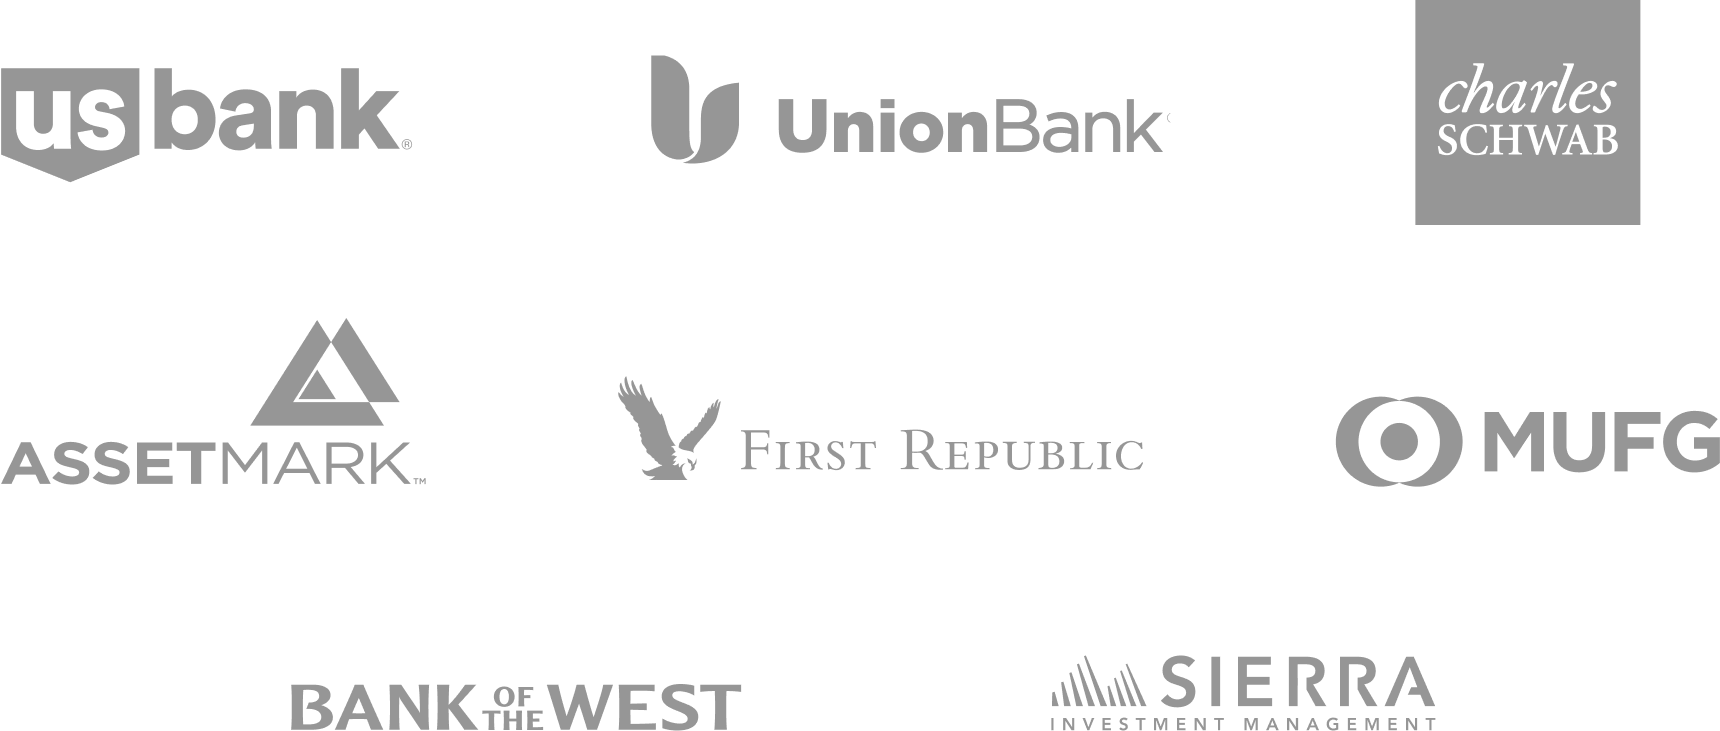 U.S. Bank, Union Bank, Charles Schwab, First Republic, Bank of the West, AssetMark, MUFG, Sierra Investment Management